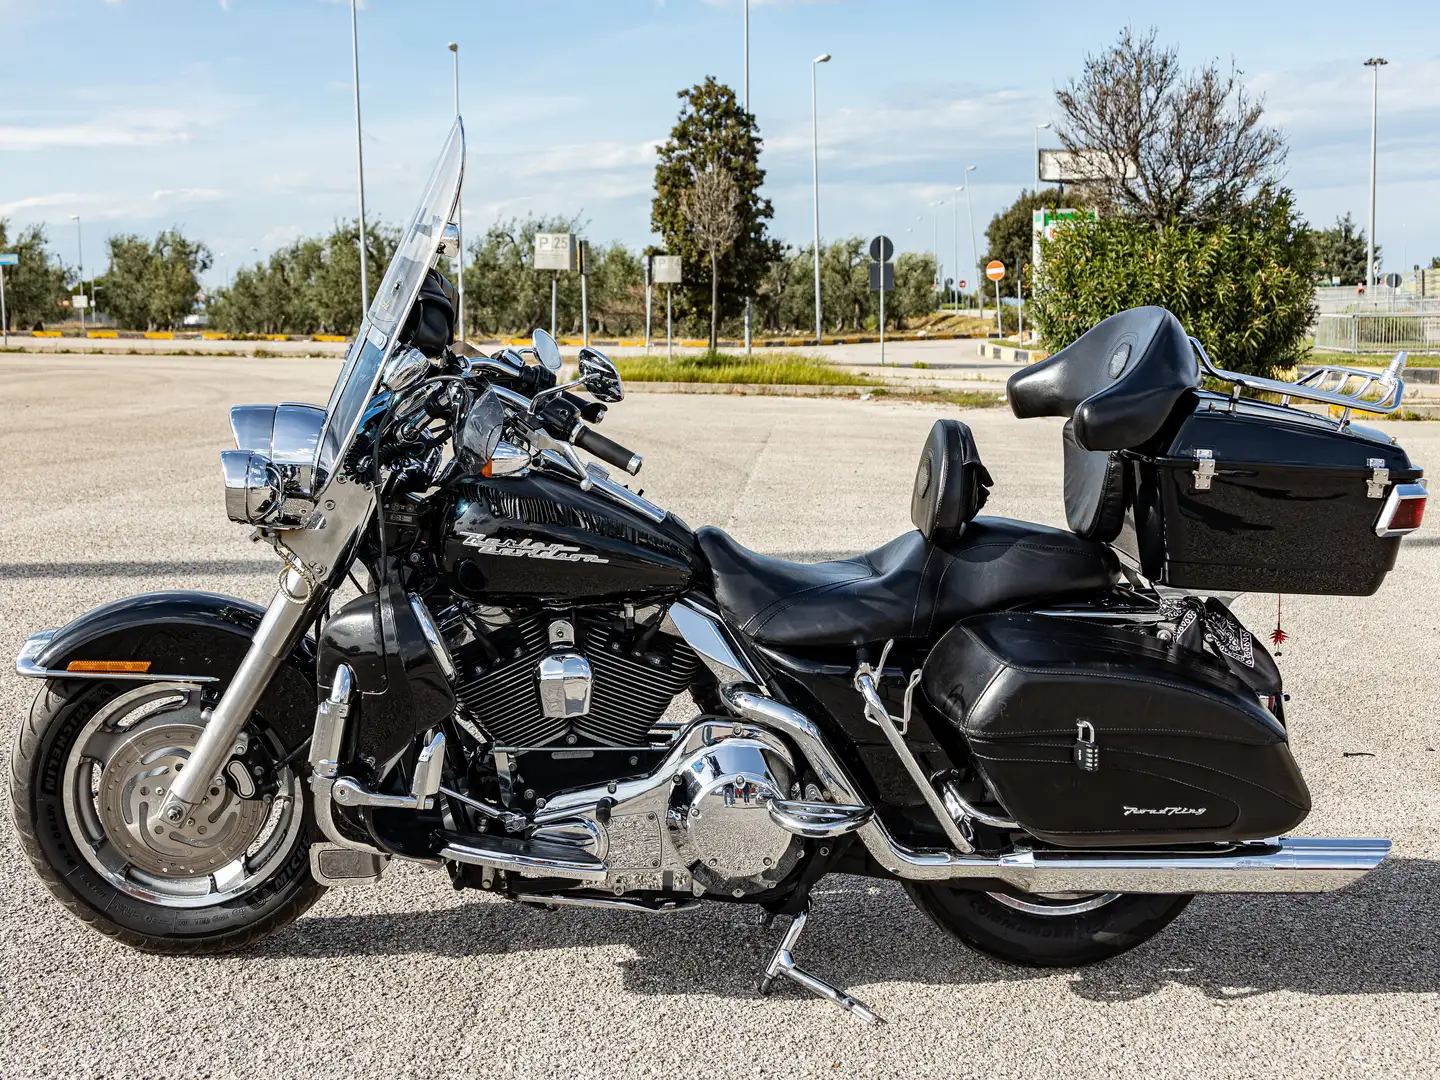 usato Harley-Davidson Road King Chopper/Cruiser a Andria per € 12.400,-